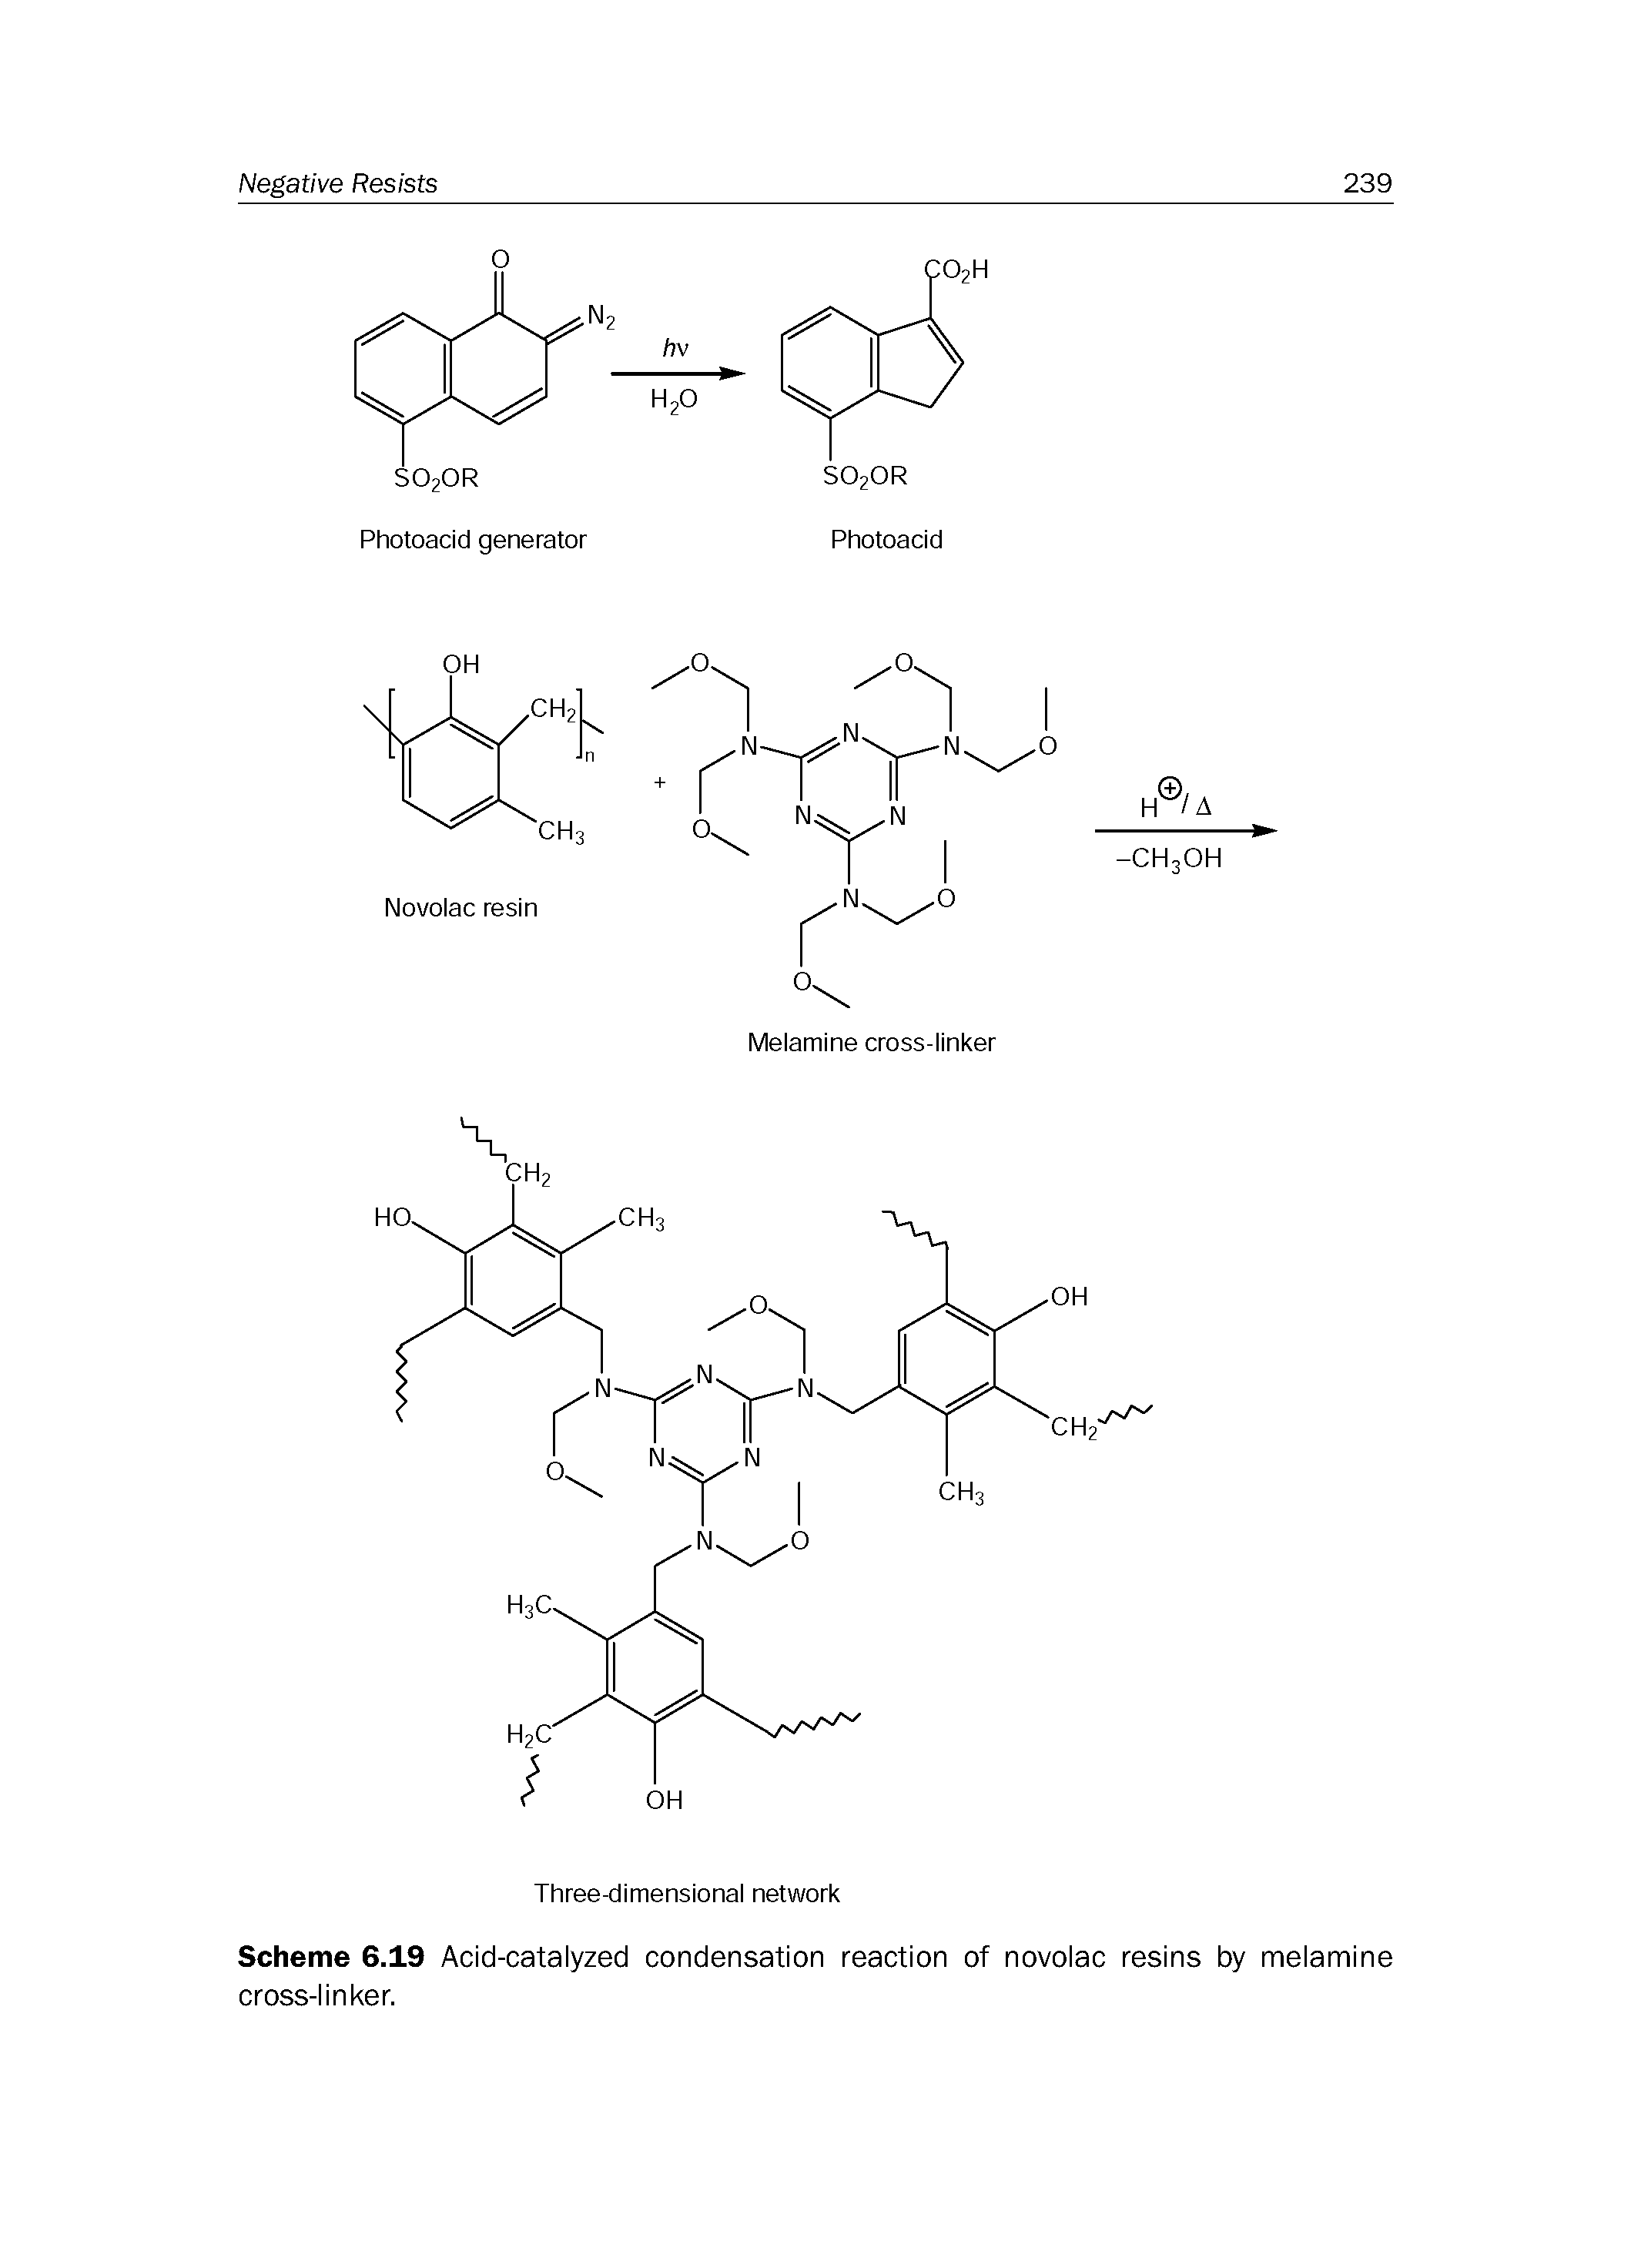 Scheme 6.19 Acid-catalyzed condensation reaction of novoiac resins by melamine cross-linker.